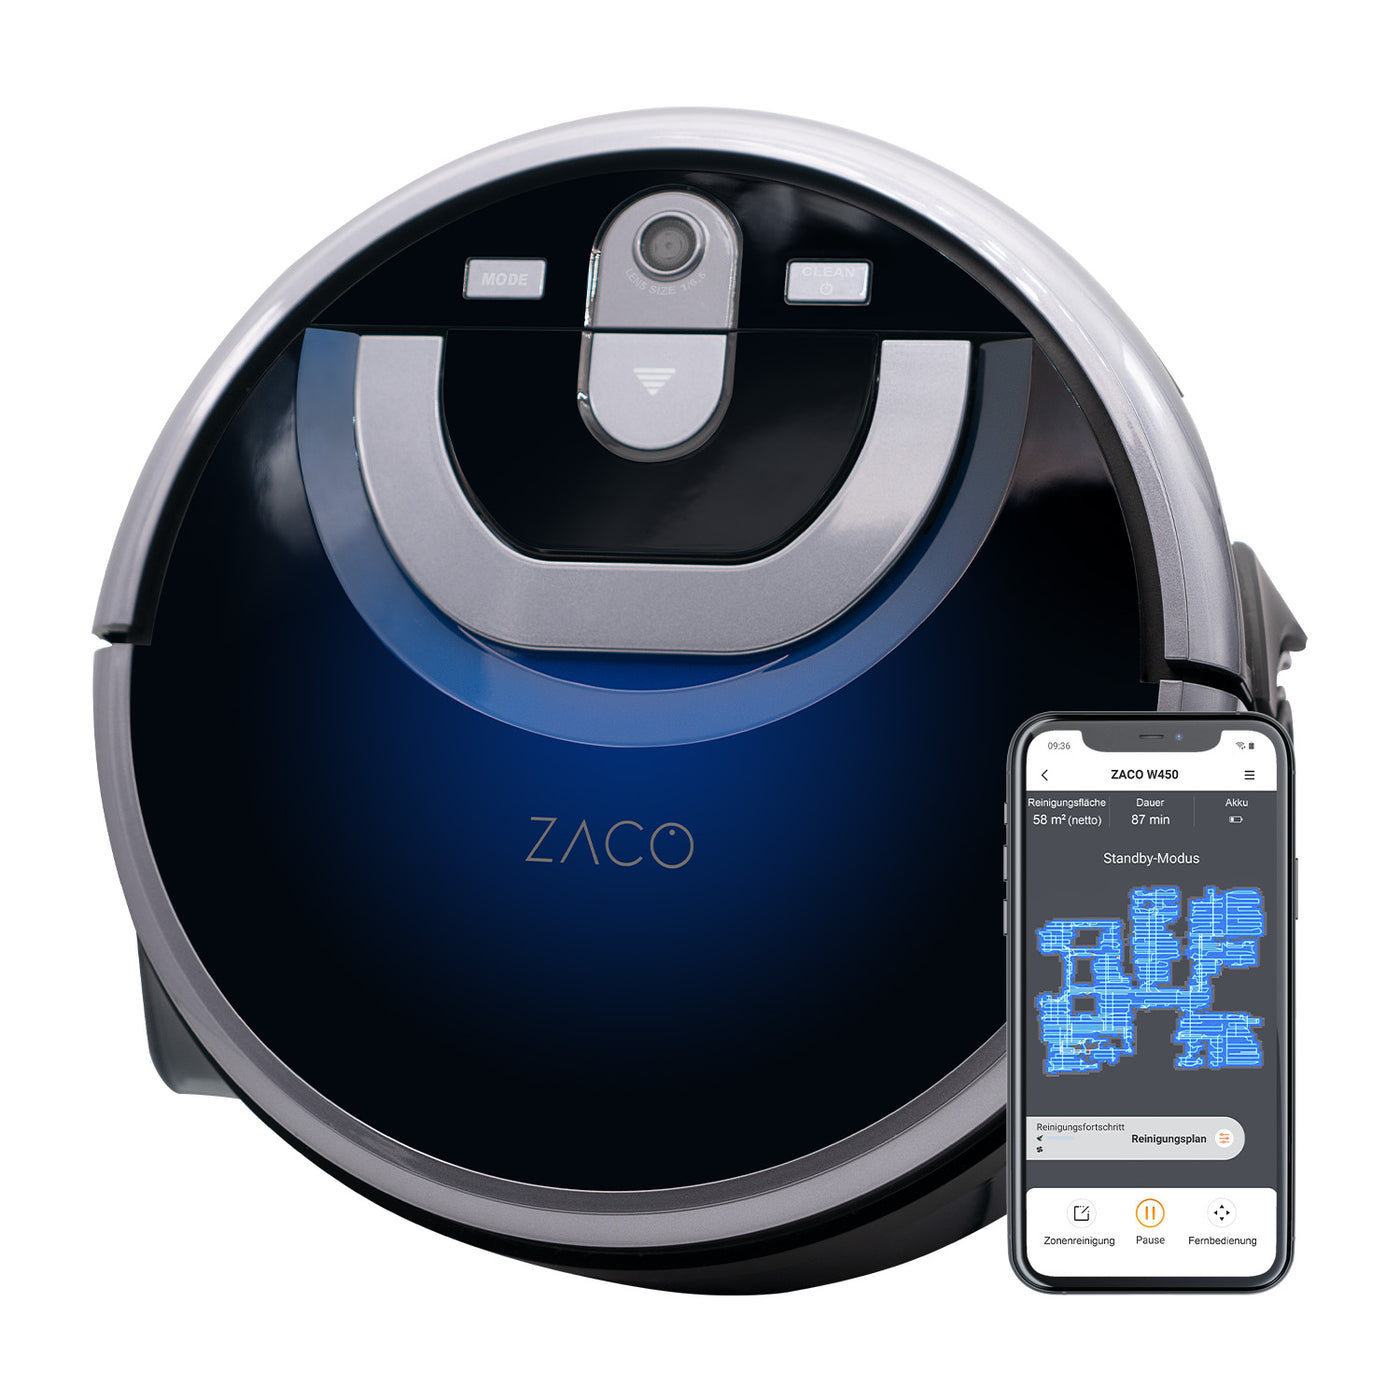 ZACO W450 mopping robot